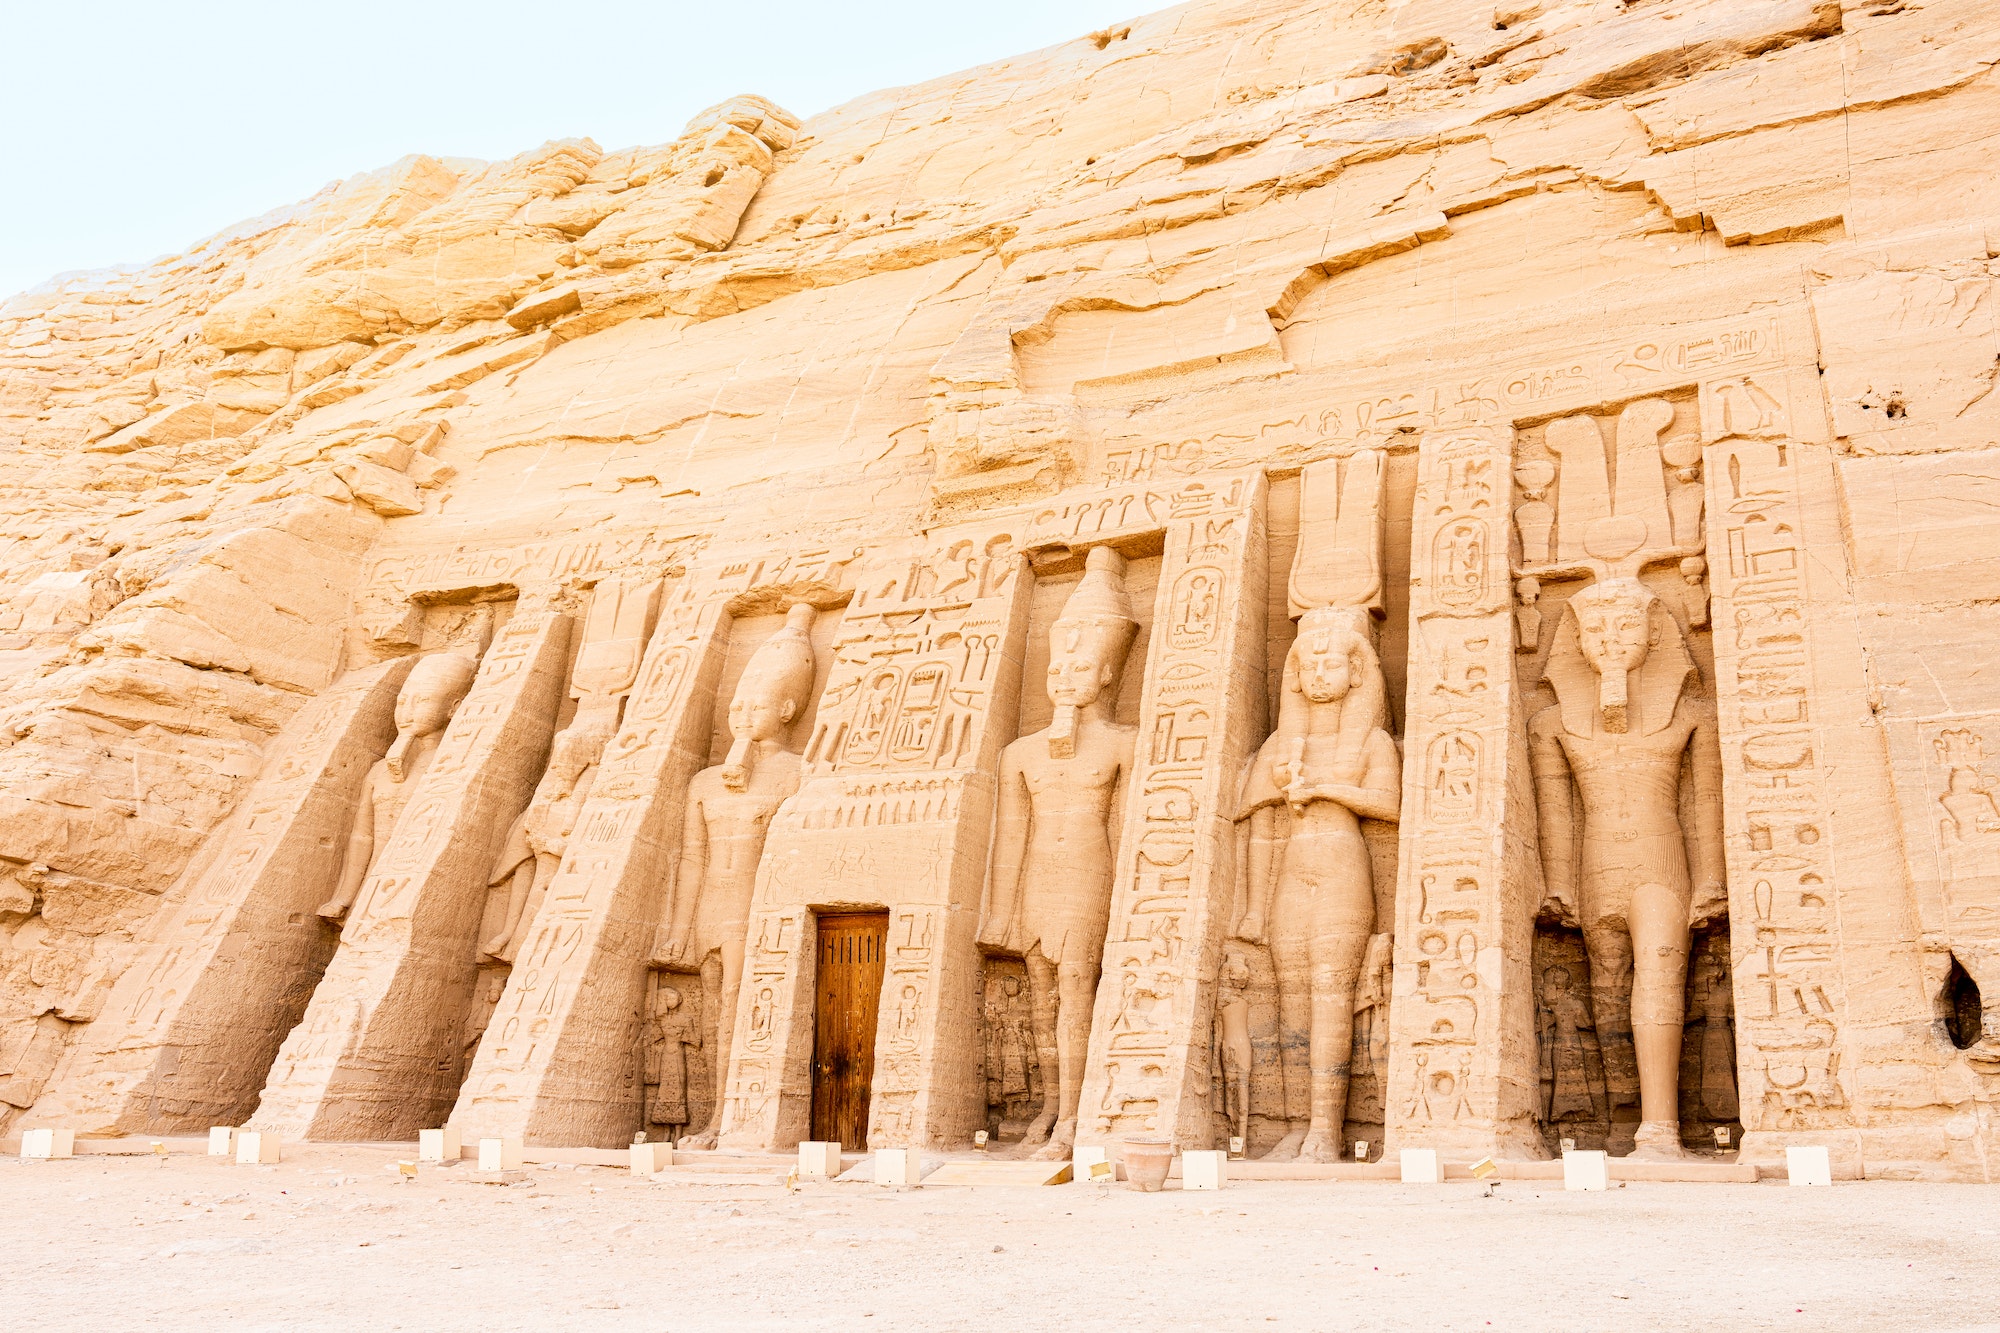 Entrance of the temple of Nefertari in Abu Simbel